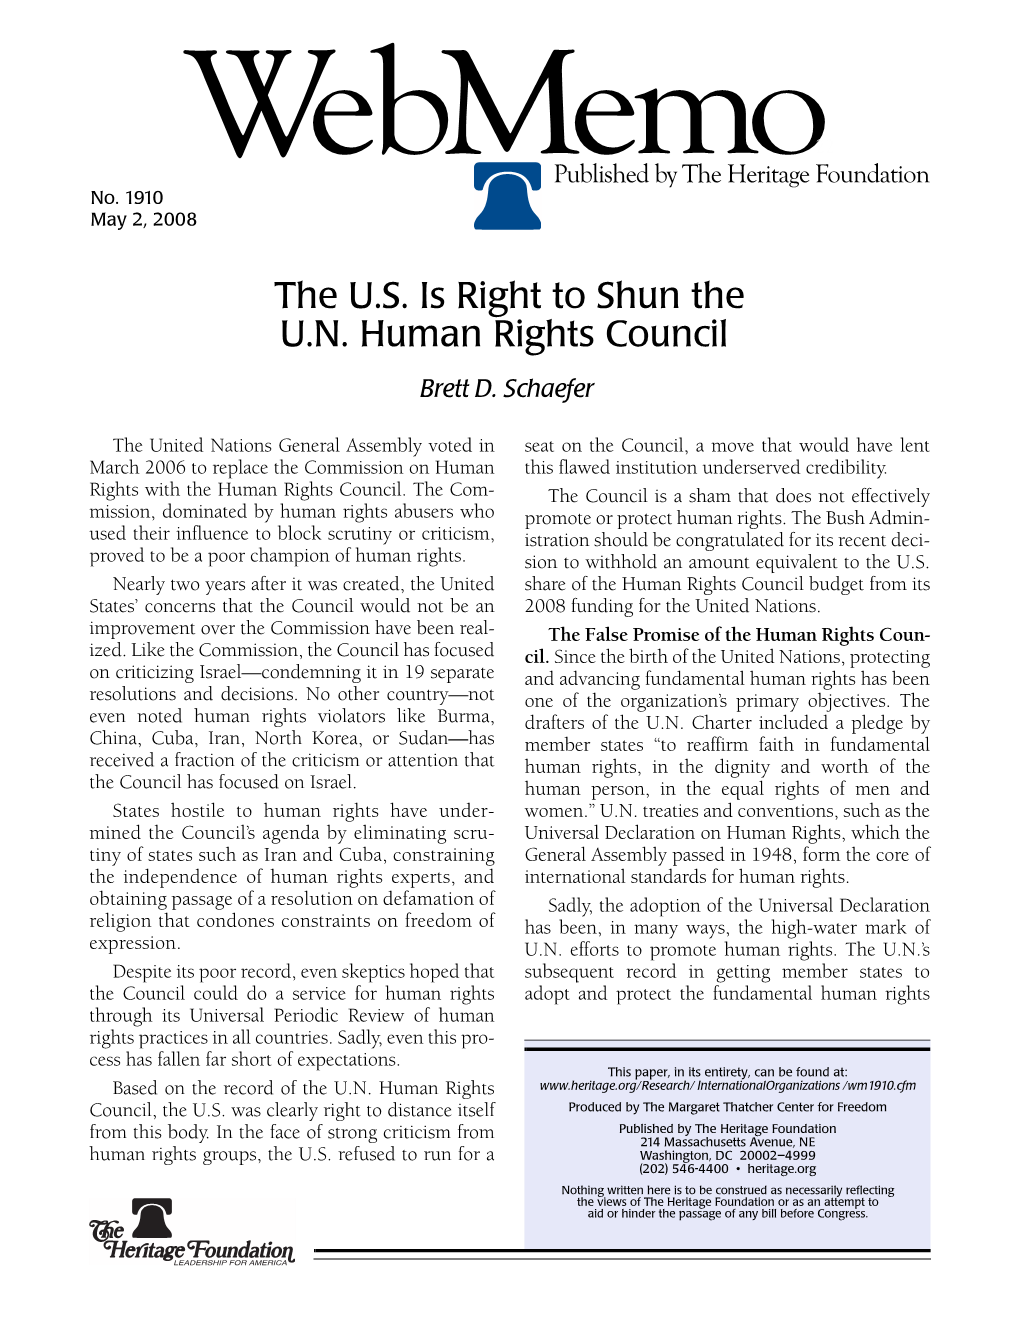 The U.S. Is Right to Shun the U.N. Human Rights Council Brett D